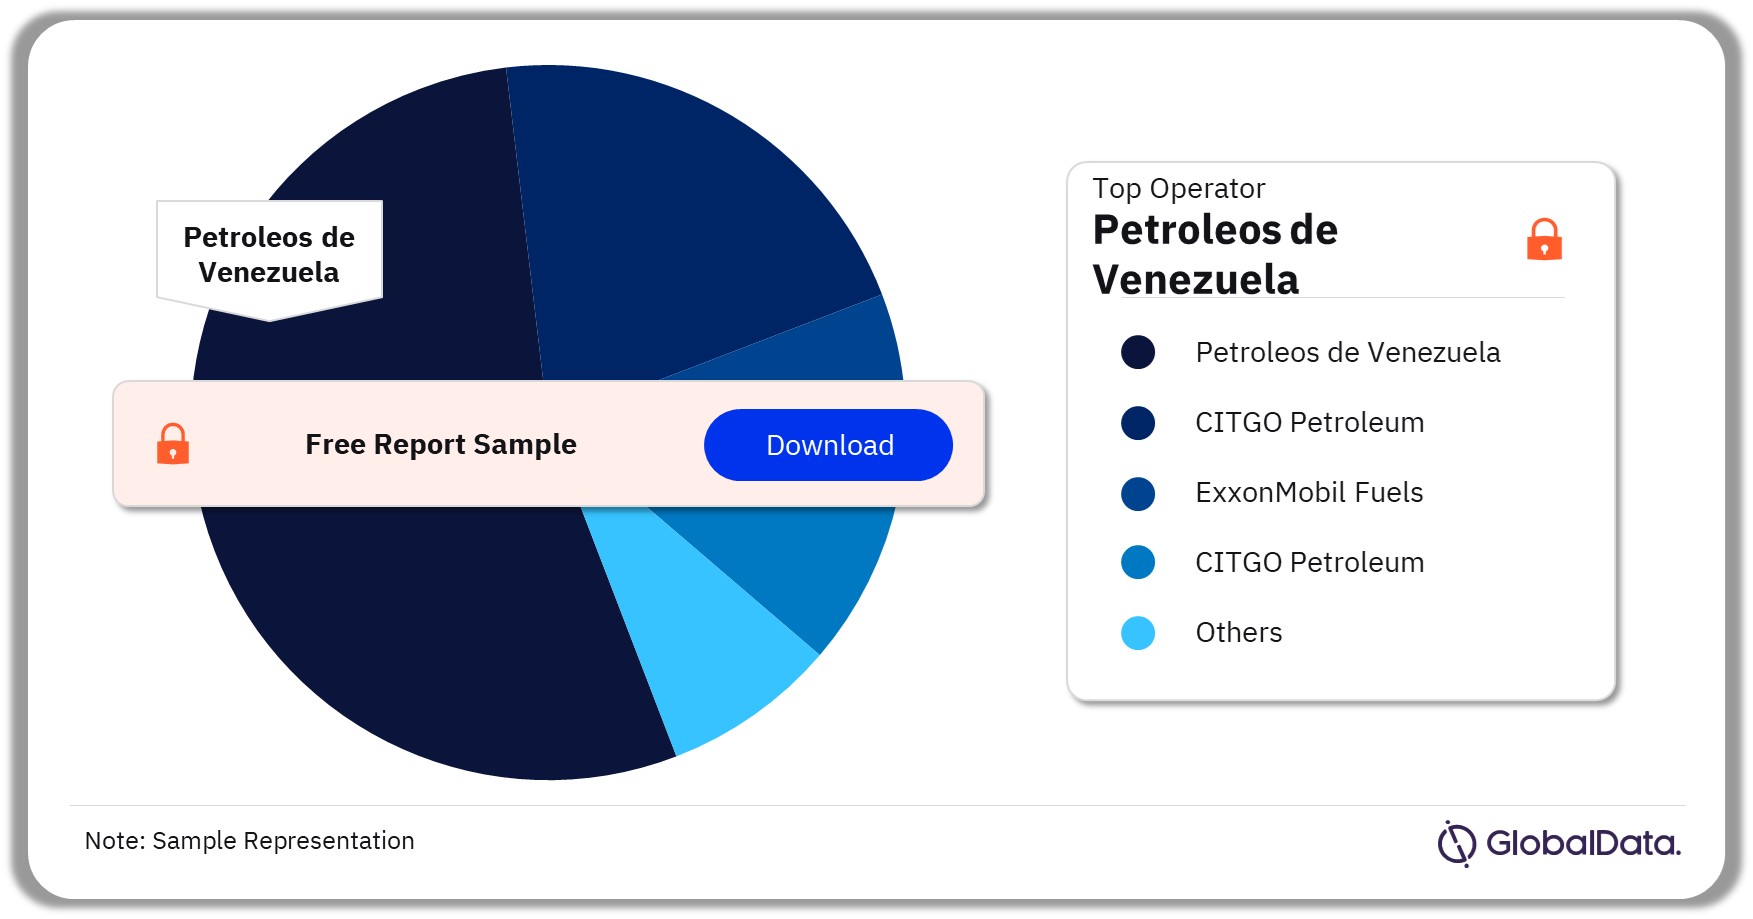 Crude Oil Refinery Maintenance Analysis by Operators, 2023 (%)